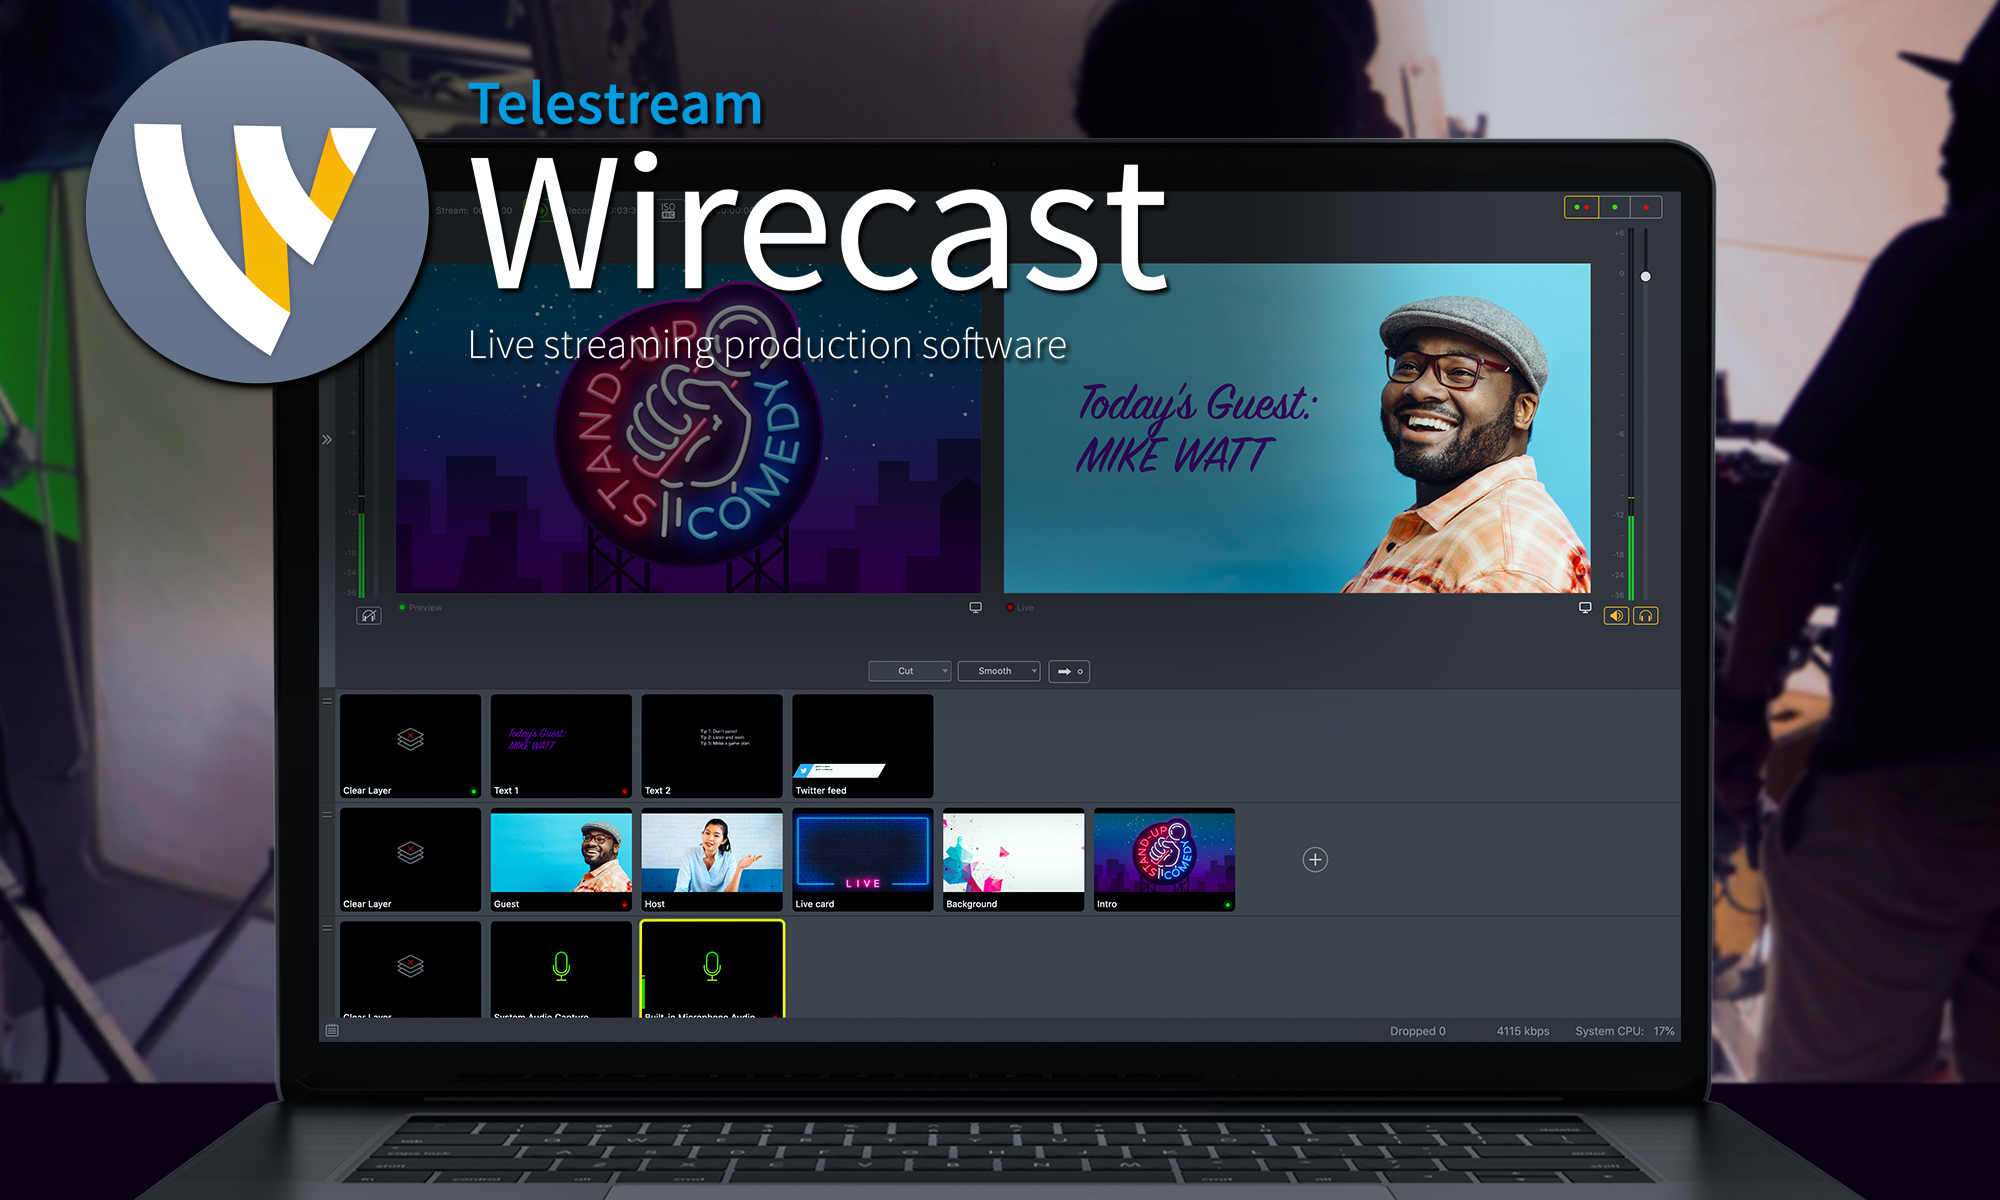 wirecast tutorial